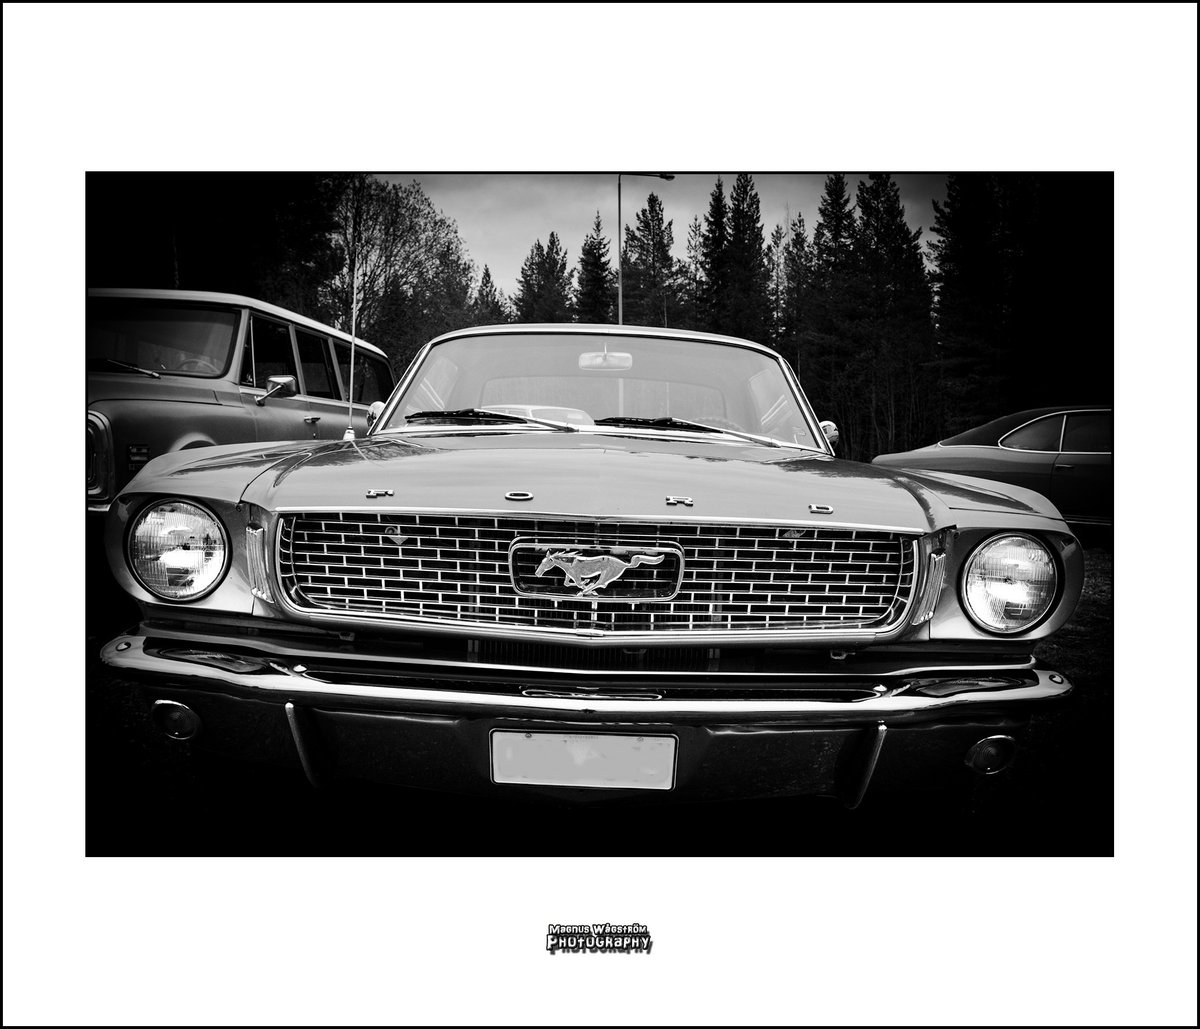 Ford Mustang 1966 😎
#ford #mustang #1966 #fordmustang #fordmustang1966 #car #carphotography #carphotographer #nikon #nikonphotography #nikonphotographer #sigma #sigmalens #madewithlightroom #bnw #bnwphotography #blackandwhite #blackandwhitephotography